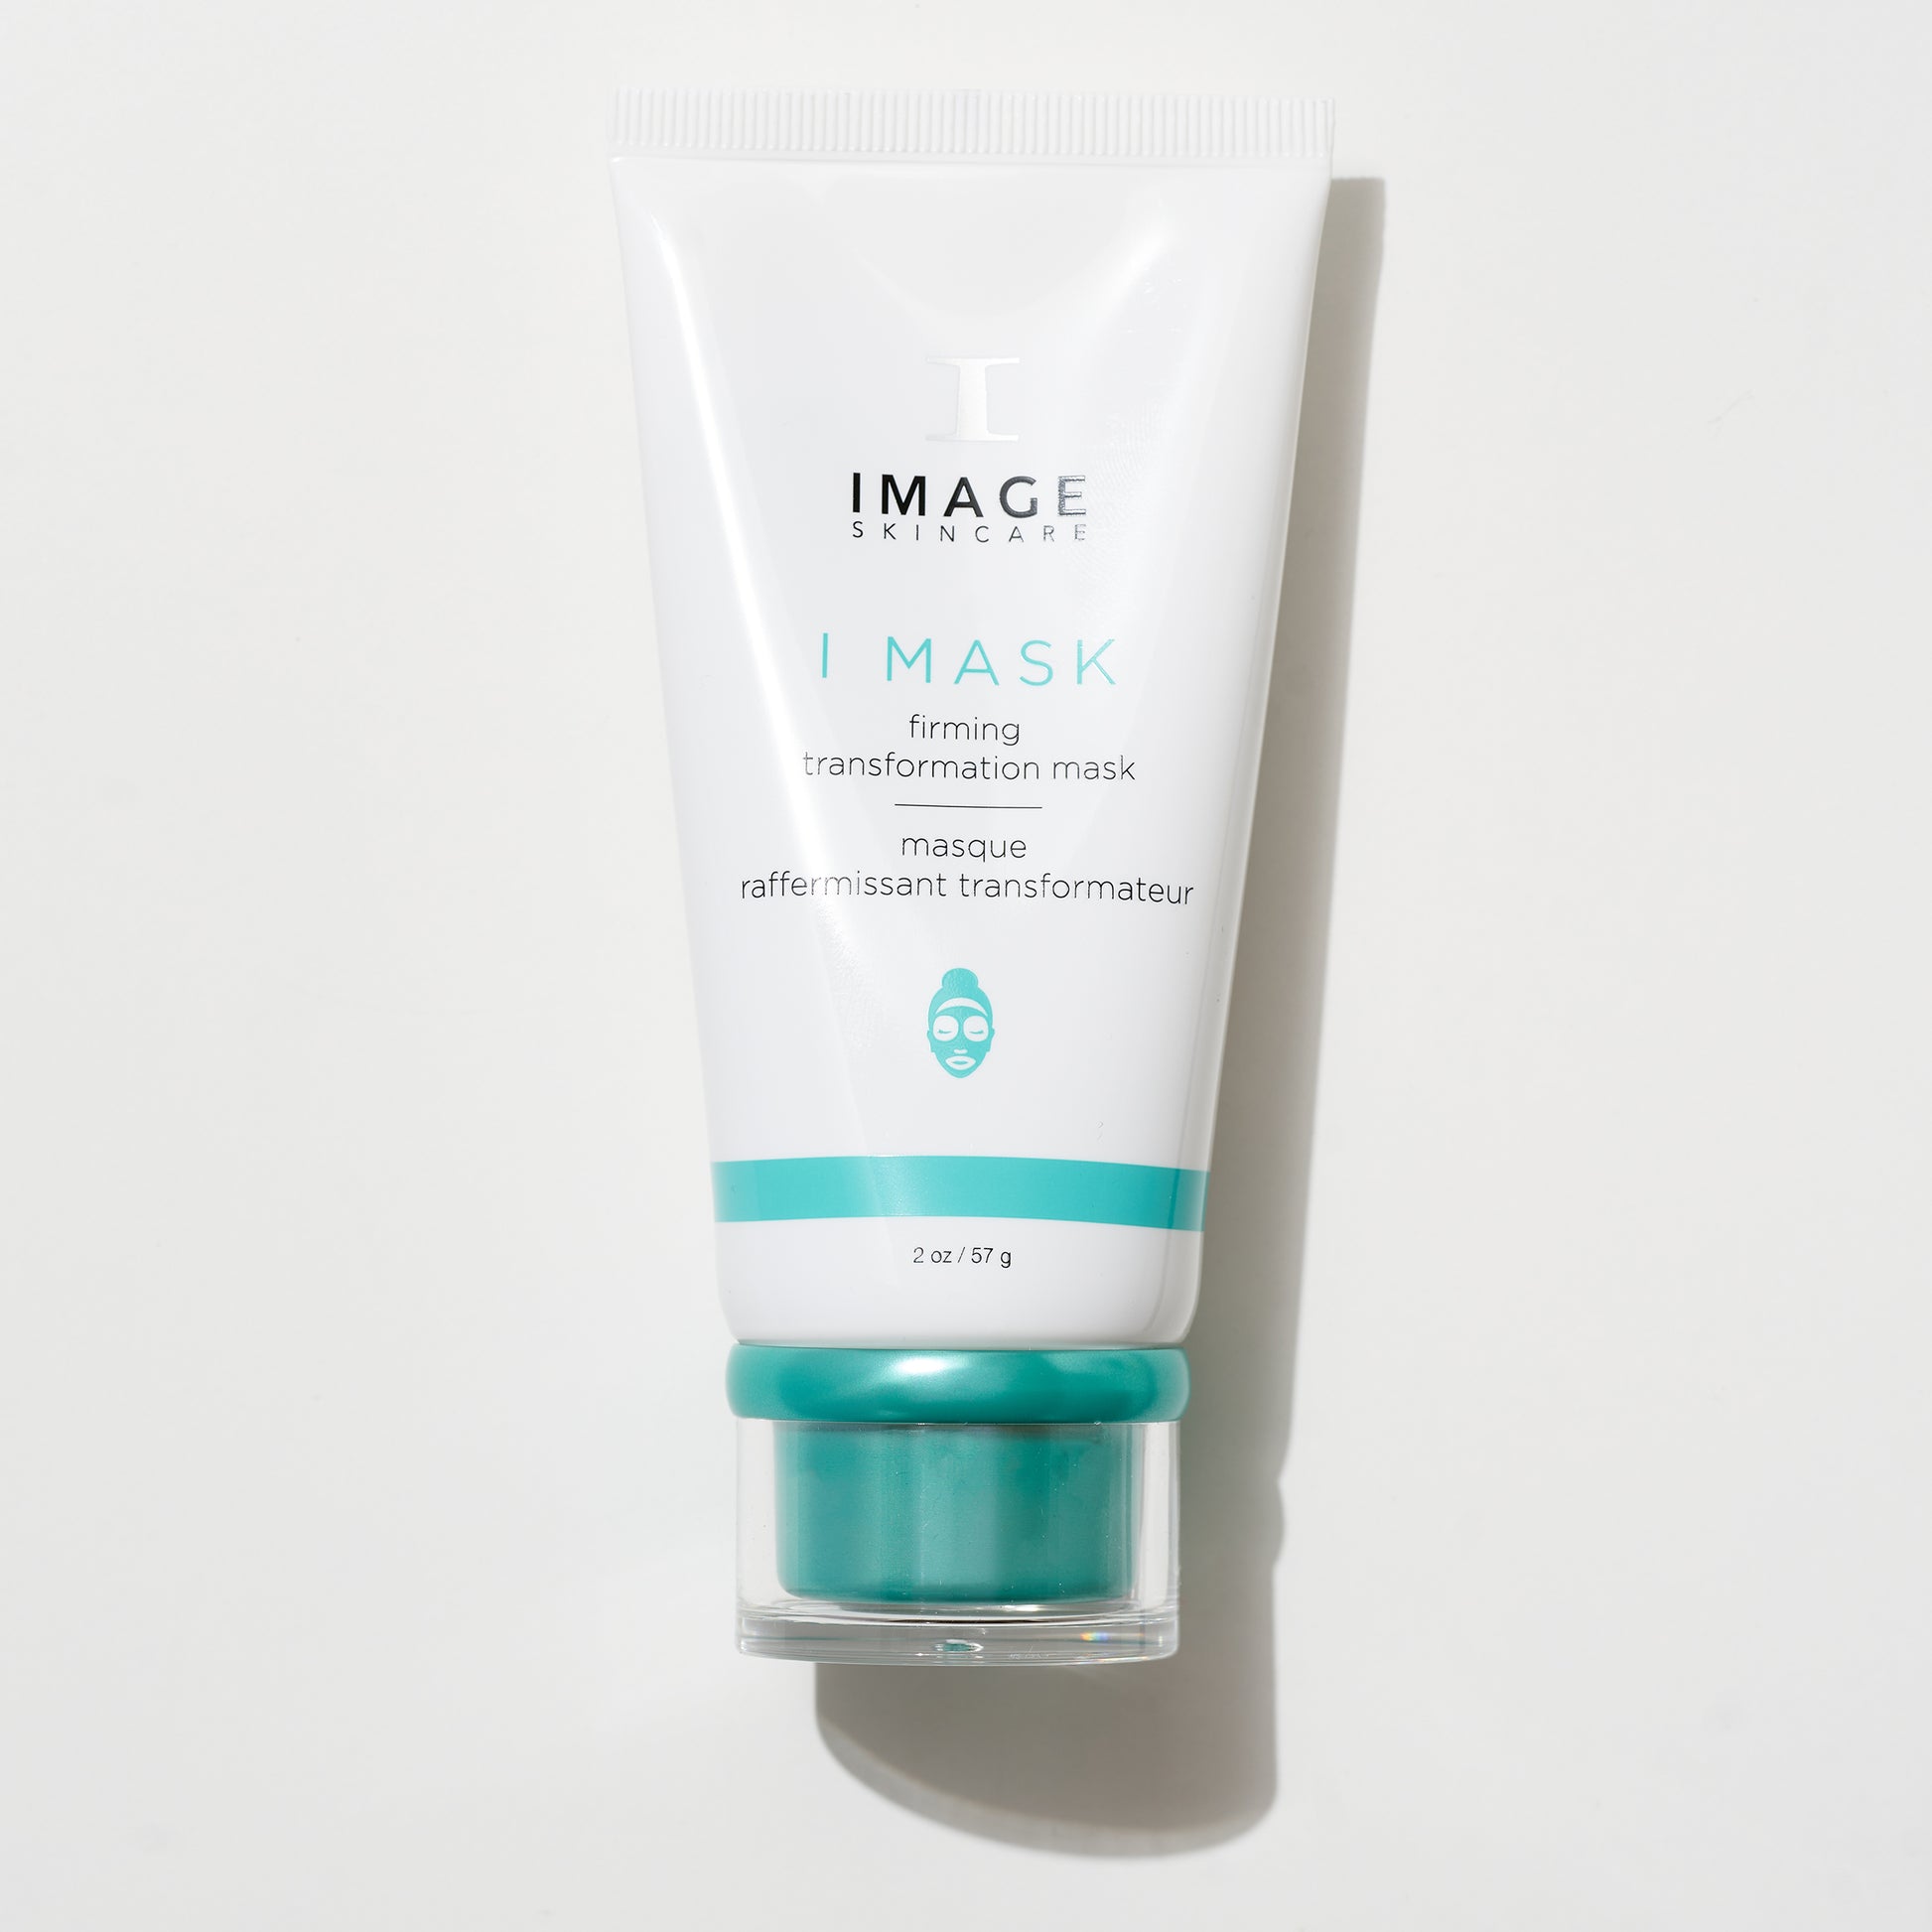 I MASK Firming Transformation Mask, Image Skincare